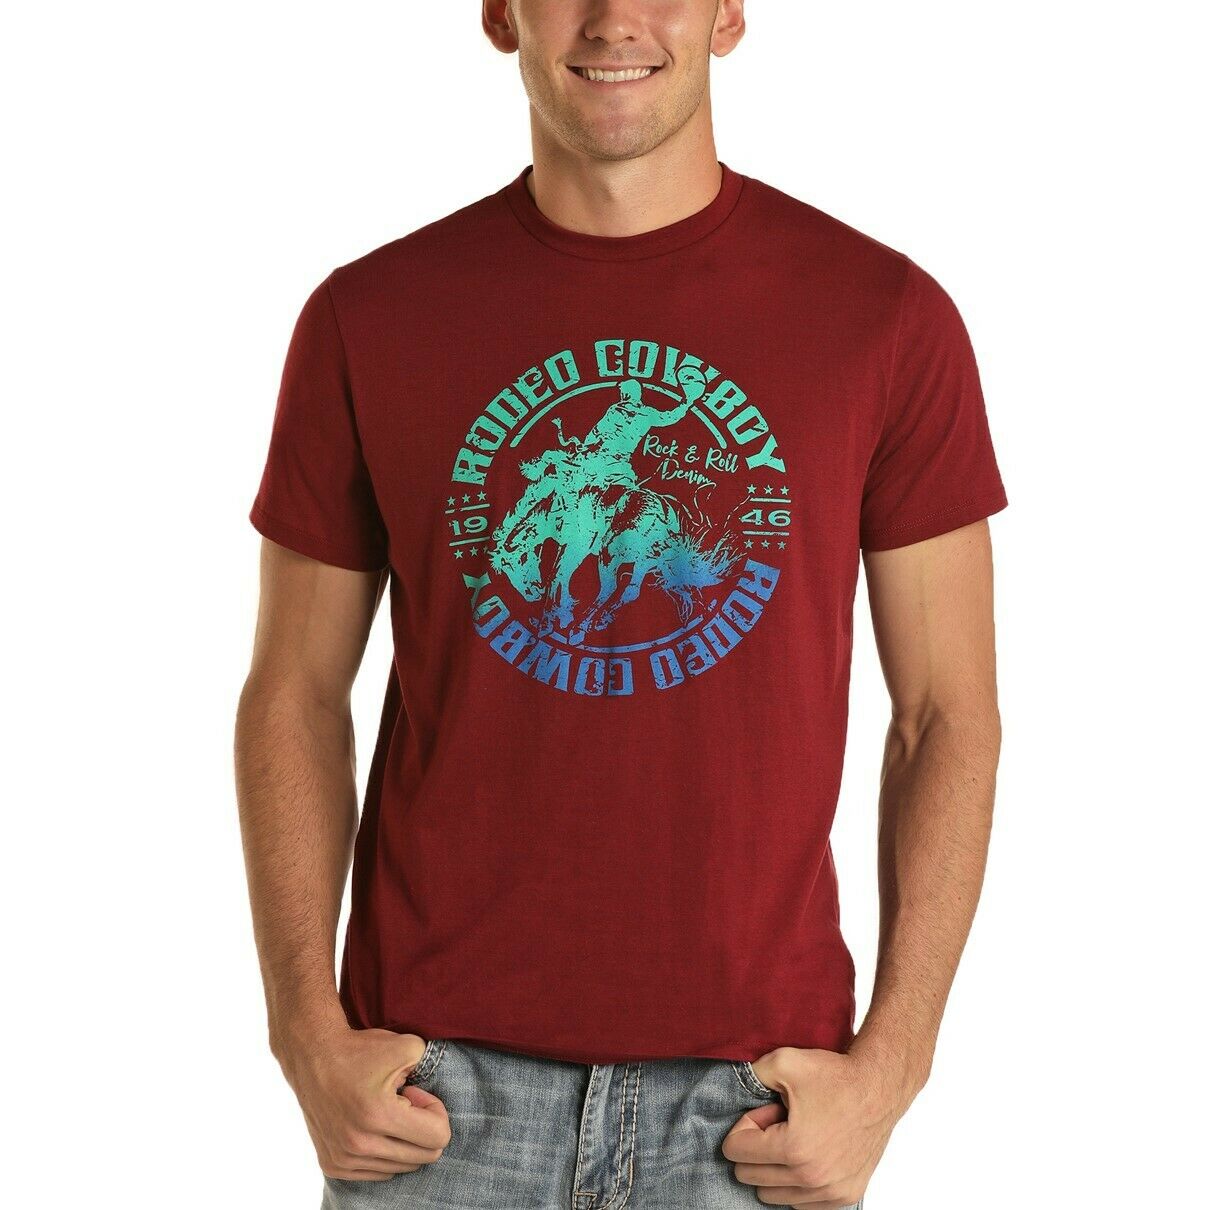 Rock & Roll Cowboy Men's Red Rodeo Cowboy Graphic T-Shirt P9-5512